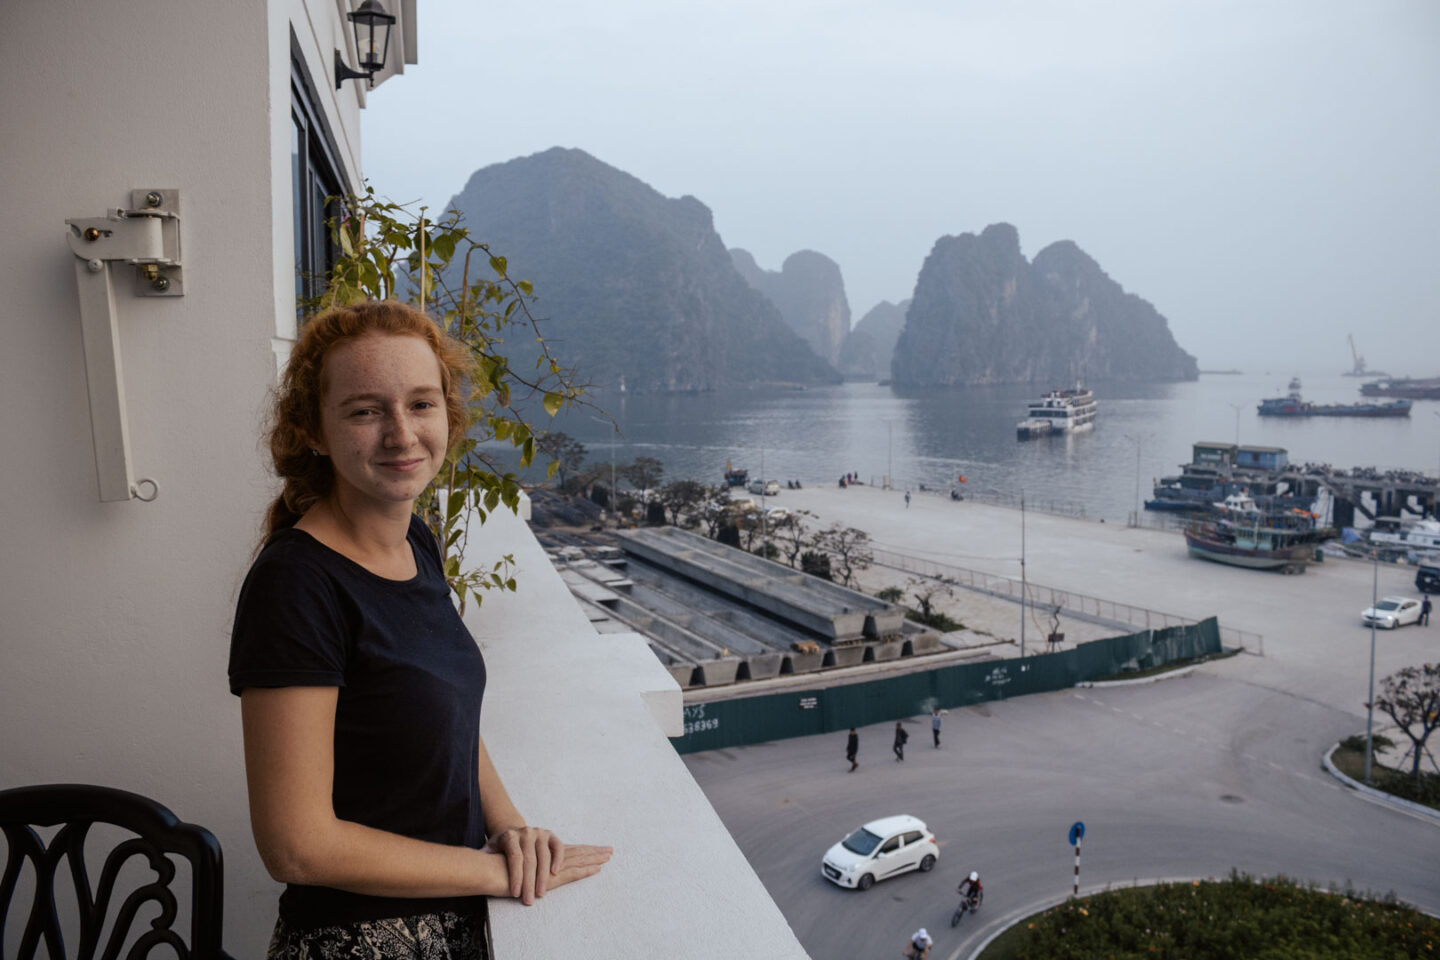 Ha Long Bay hotel view, Vietnam itinerary